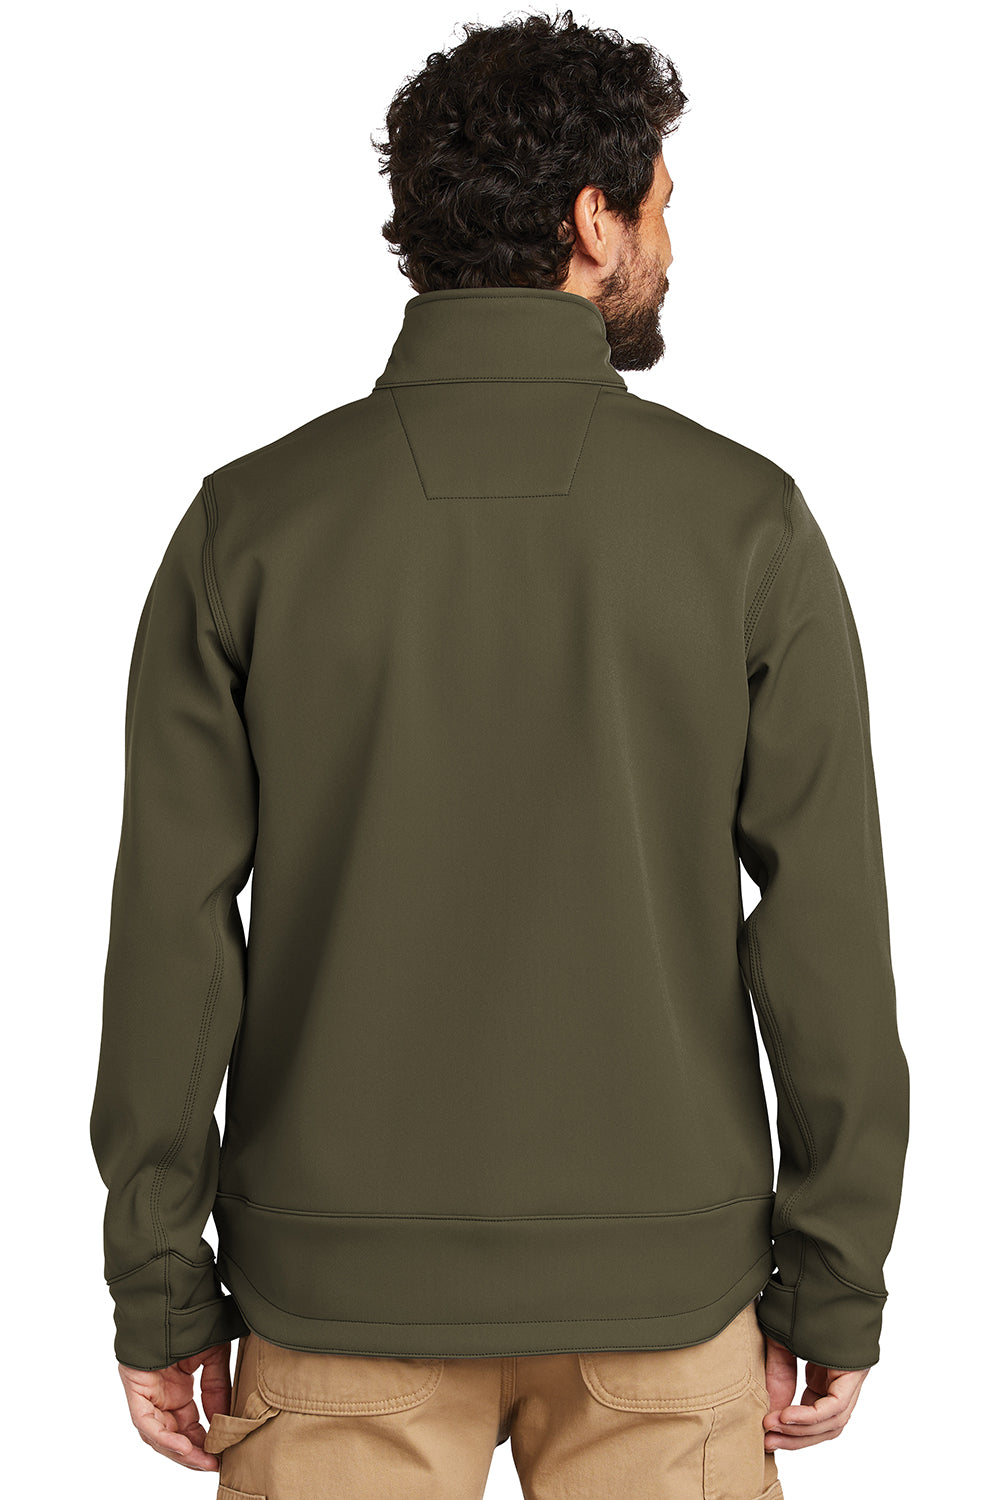 Carhartt CT102199 Mens Crowley Wind & Water Resistant Full Zip Jacket Moss Green Model Back